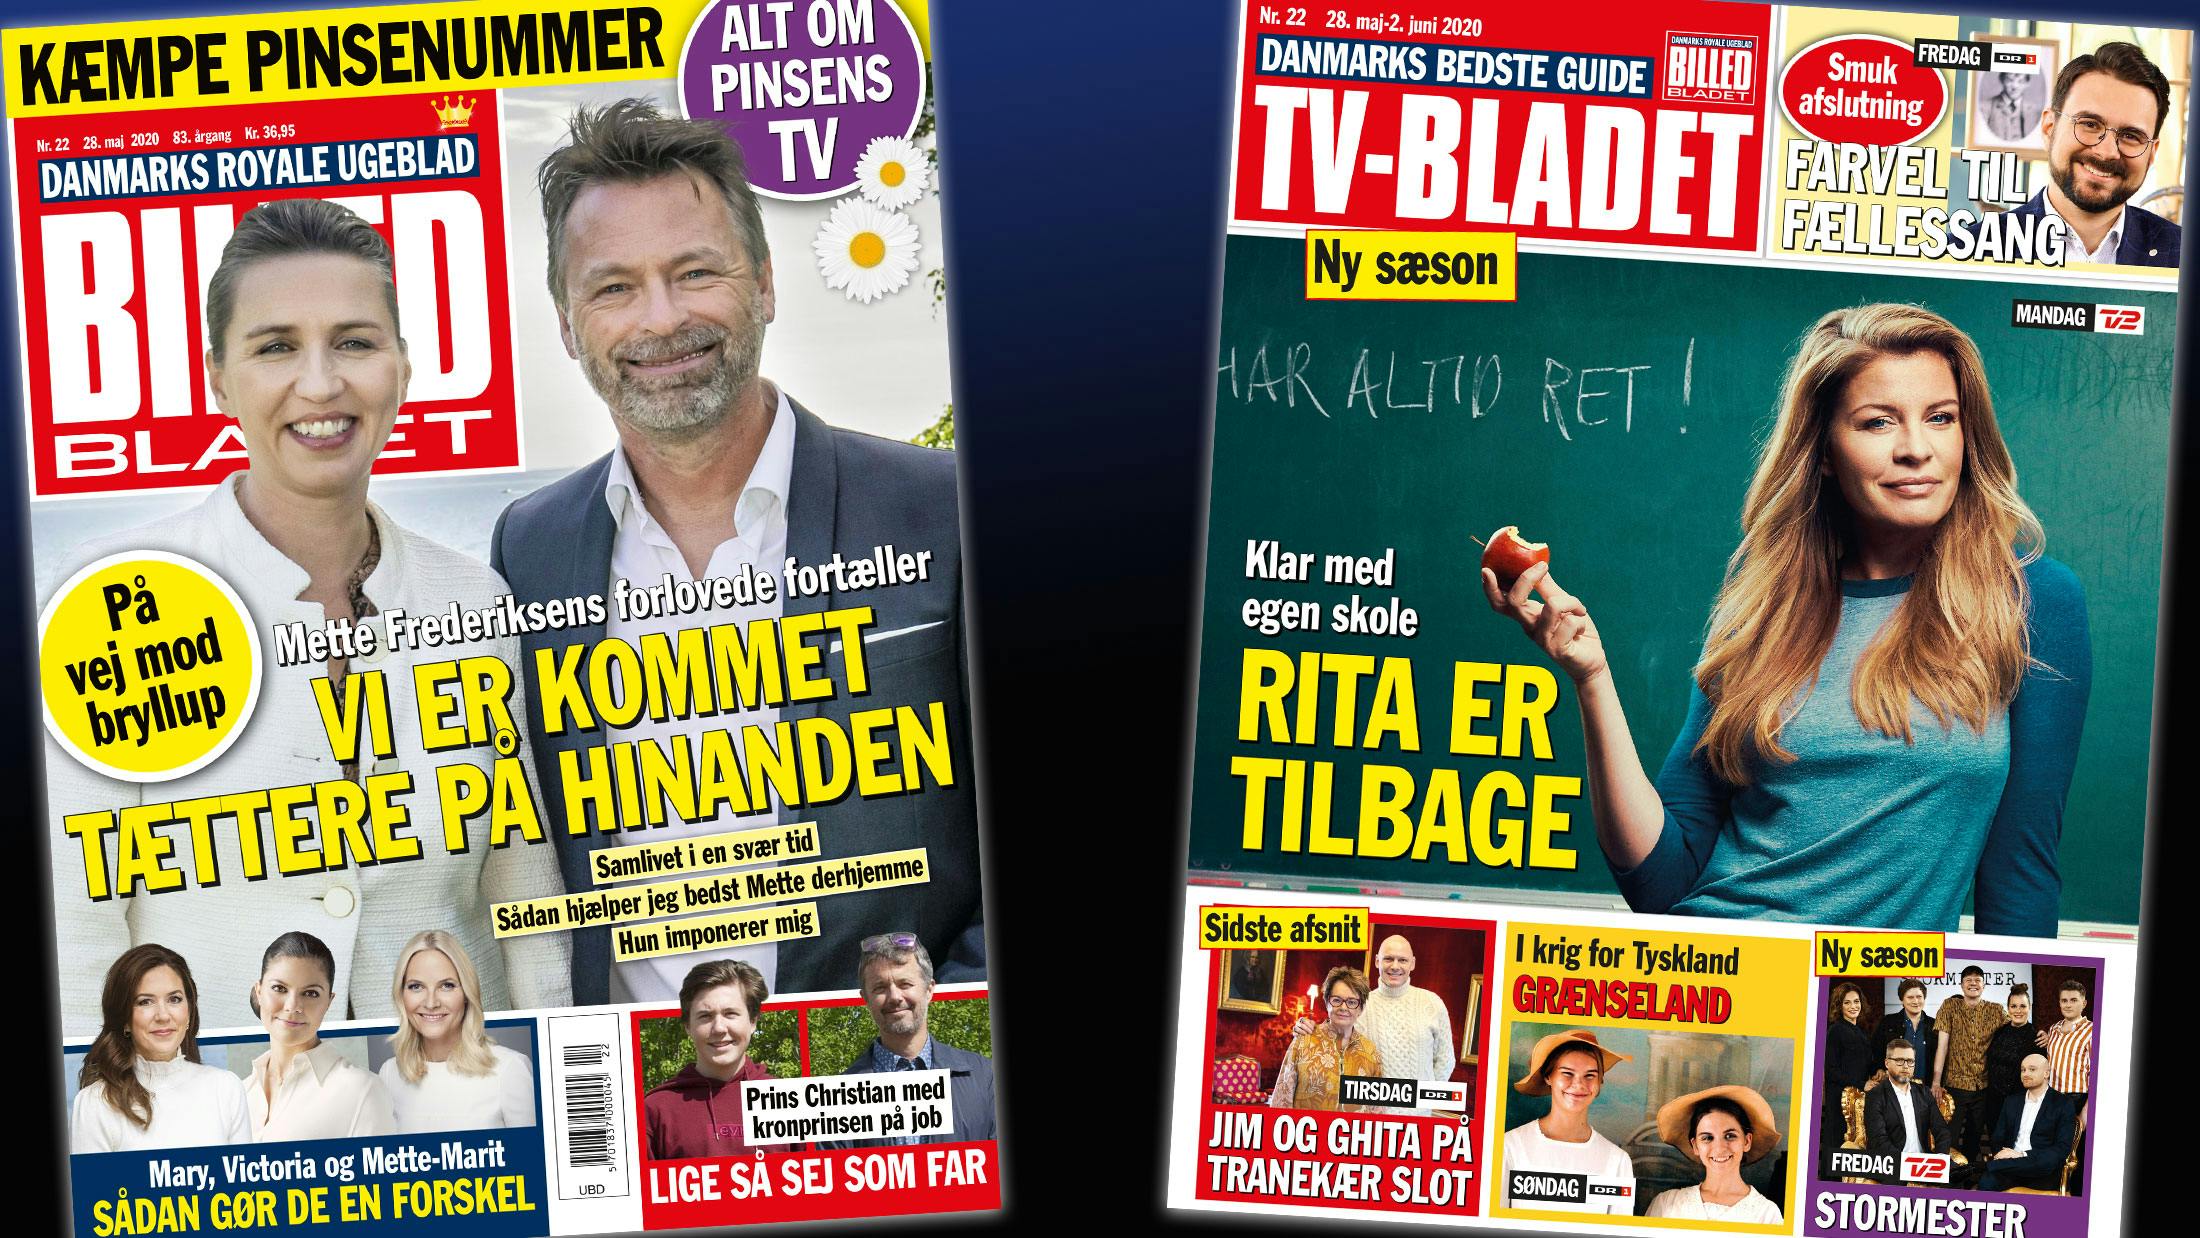 https://imgix.billedbladet.dk/media/article/webgrafik_bb22-forsider.jpg